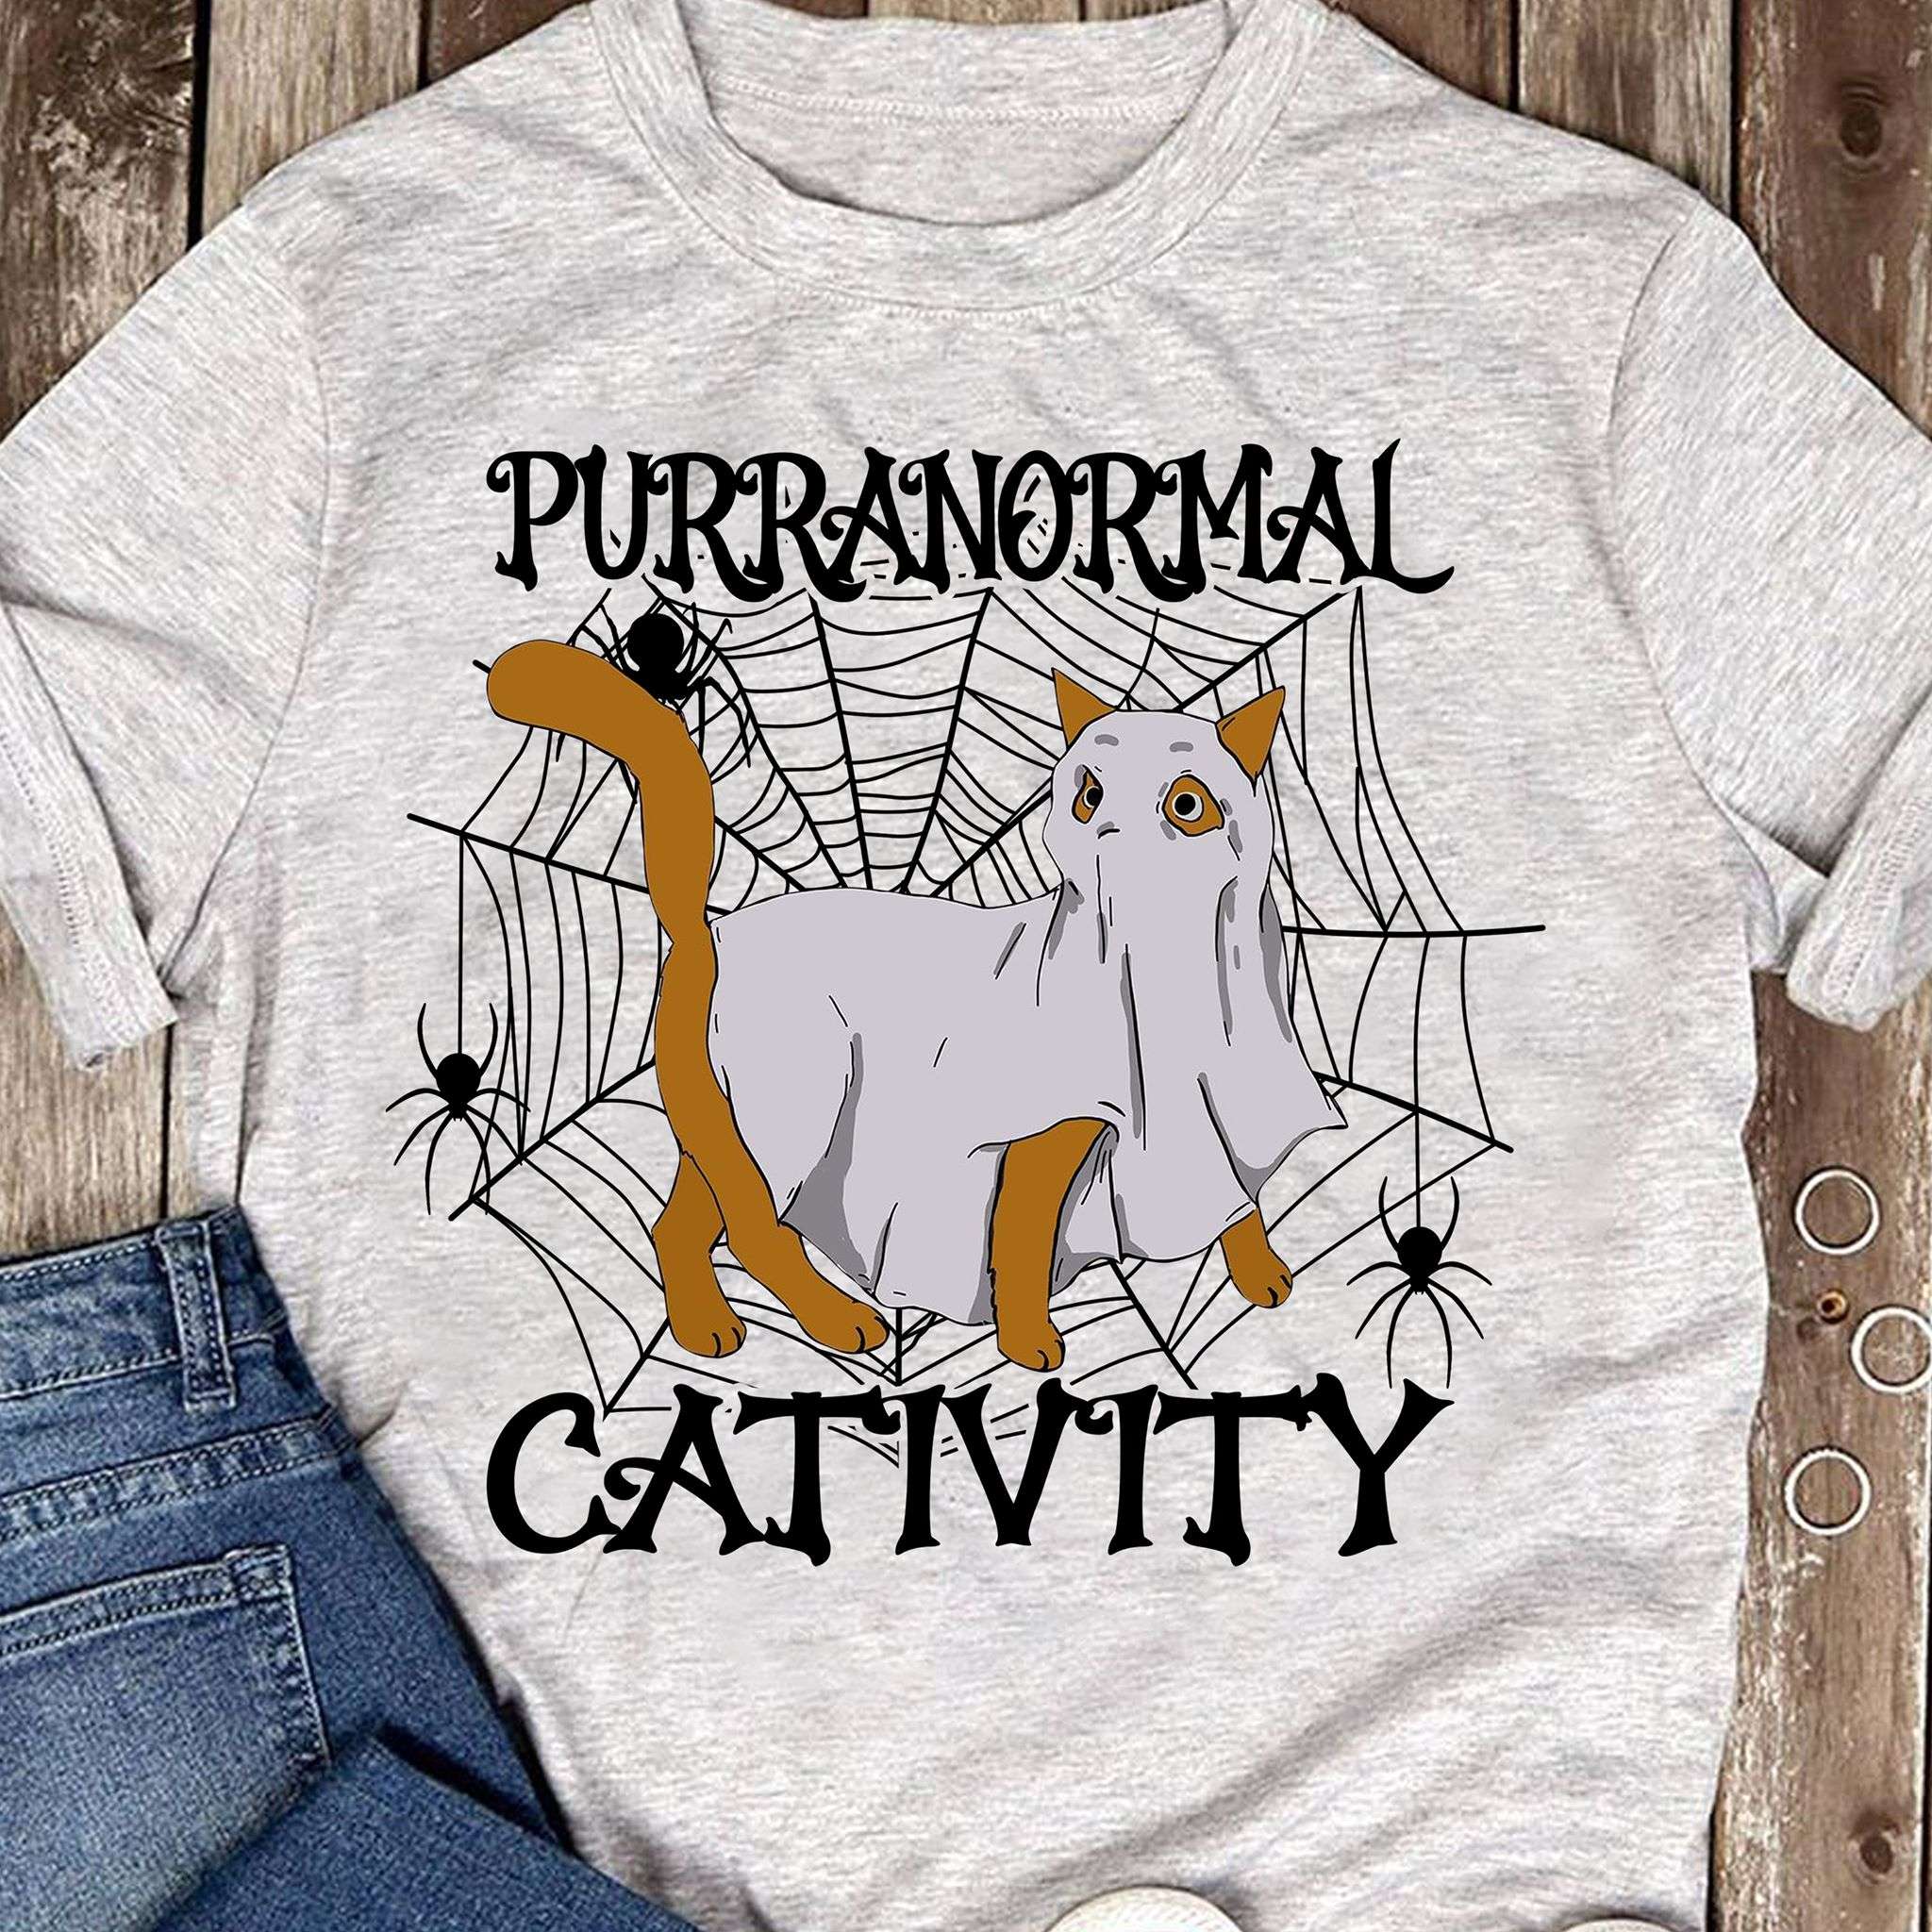 Purranormal cativity - Halloween cat costume, White boo costume cat